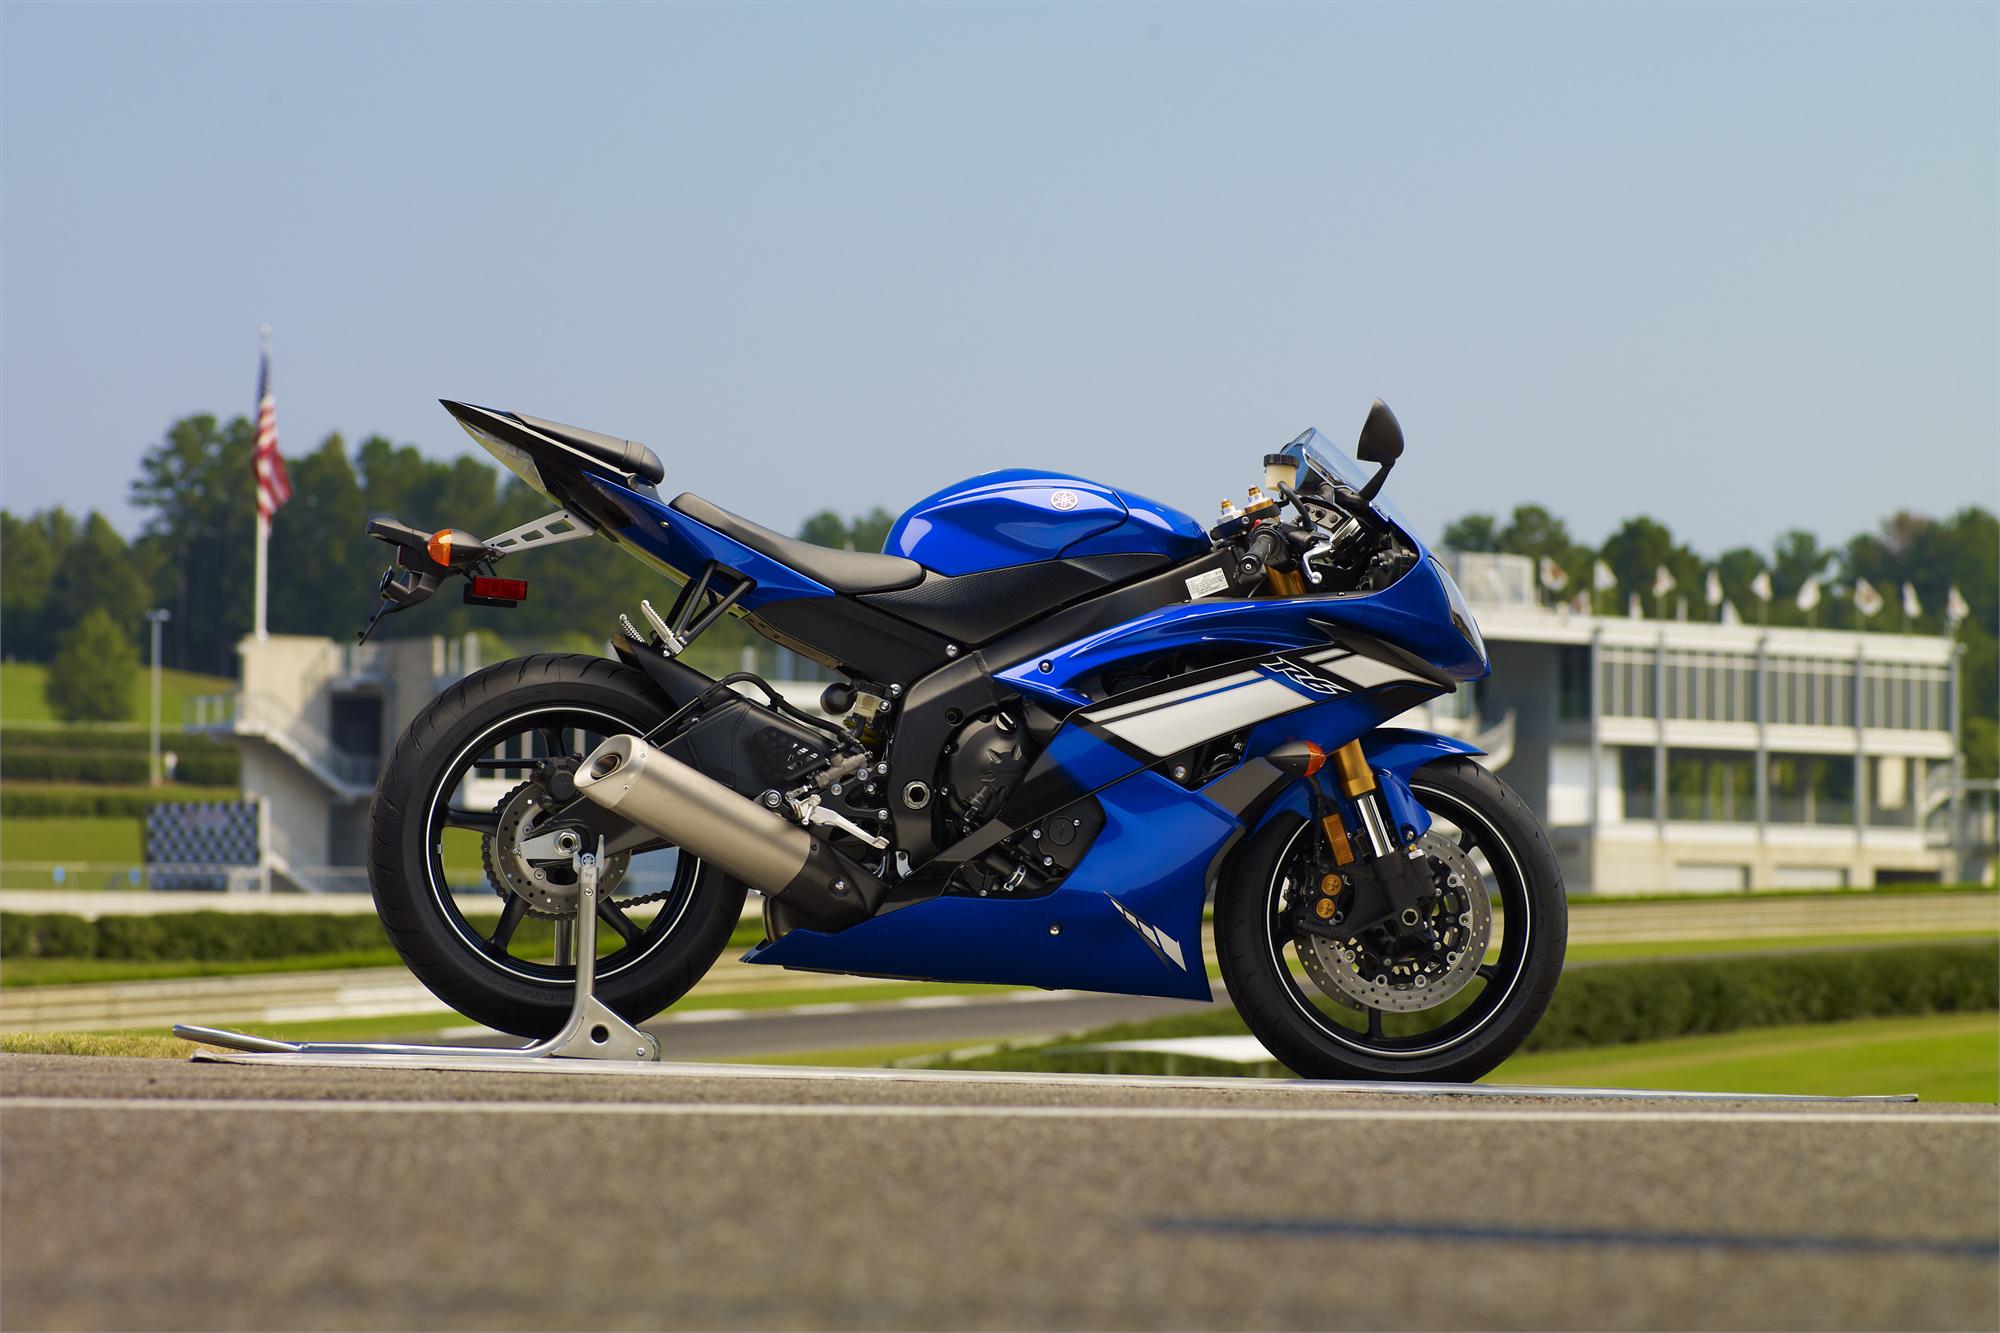 Технические характеристики мотоцикла Yamaha (Ямаха) YZF-R6, обзор, и немного истории